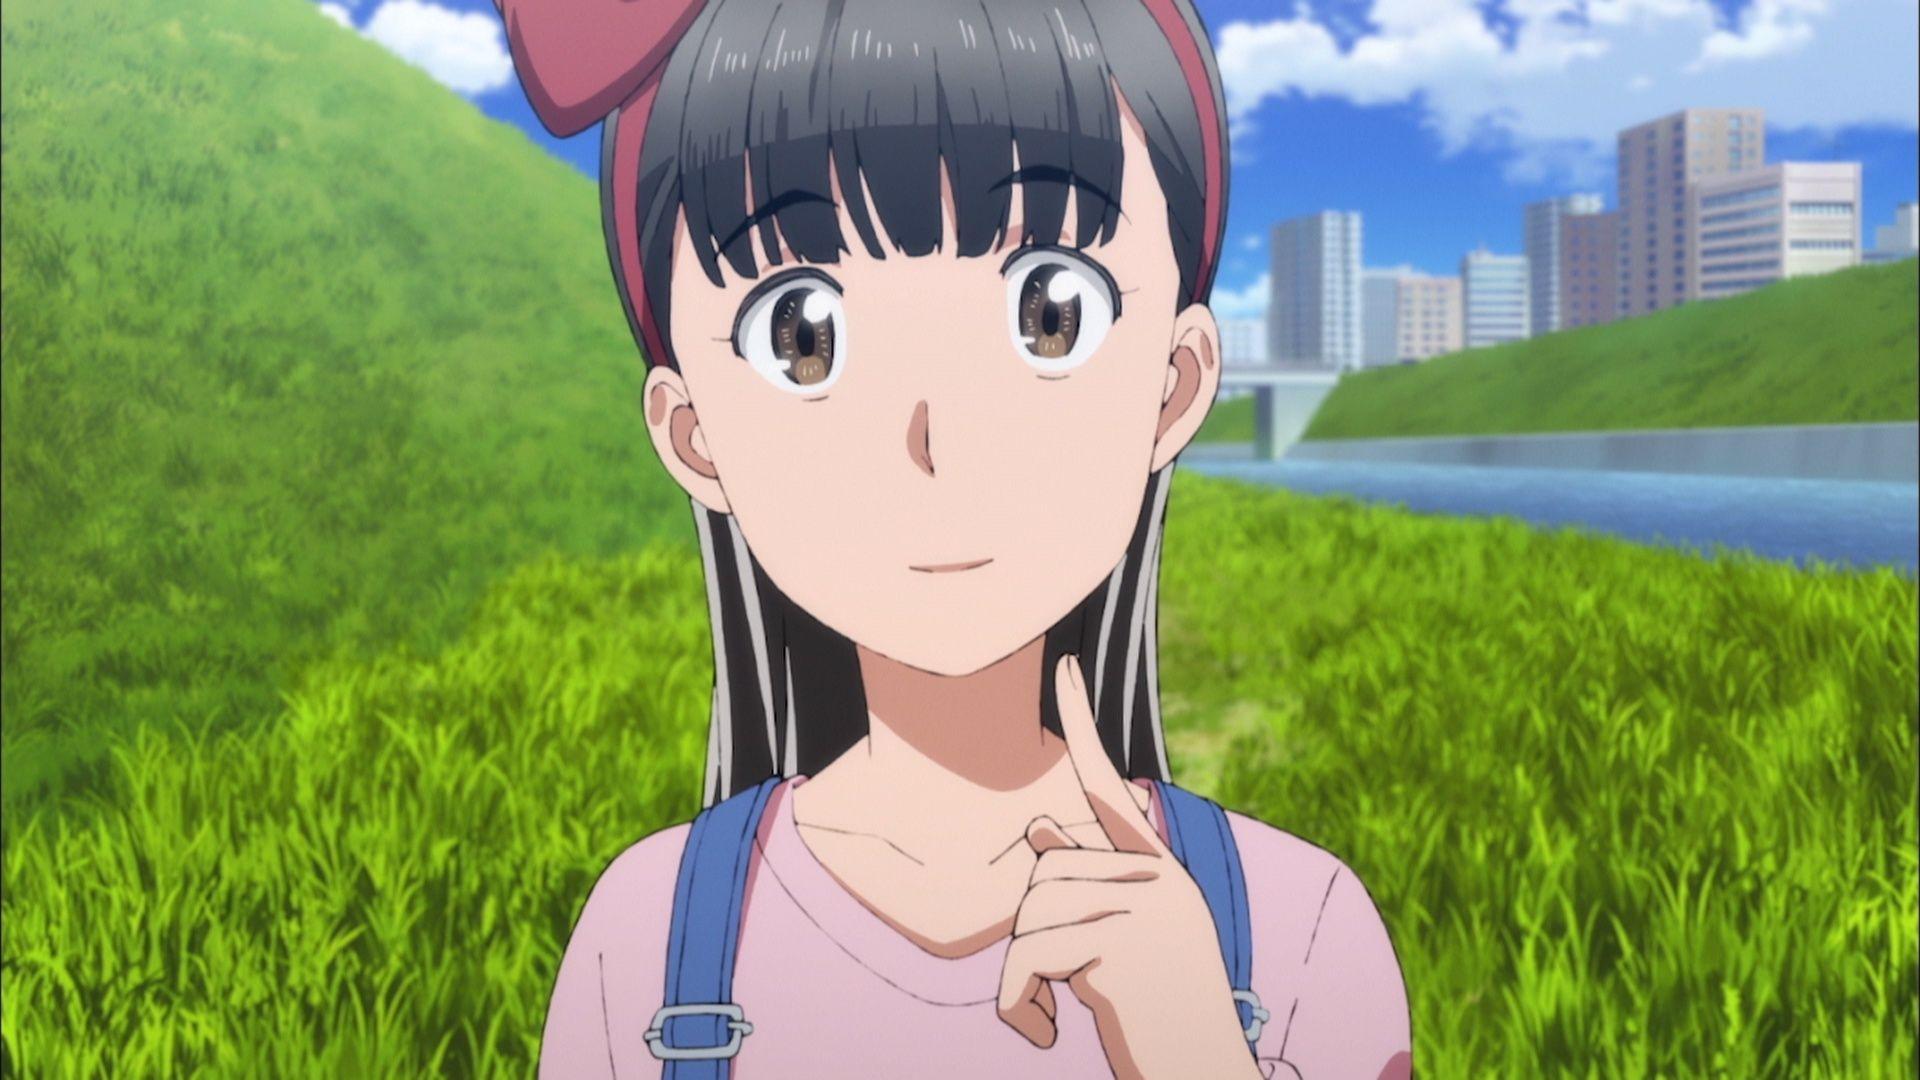 Watch HINAMATSURI Season 1 Episode 5 Anime on Funimation